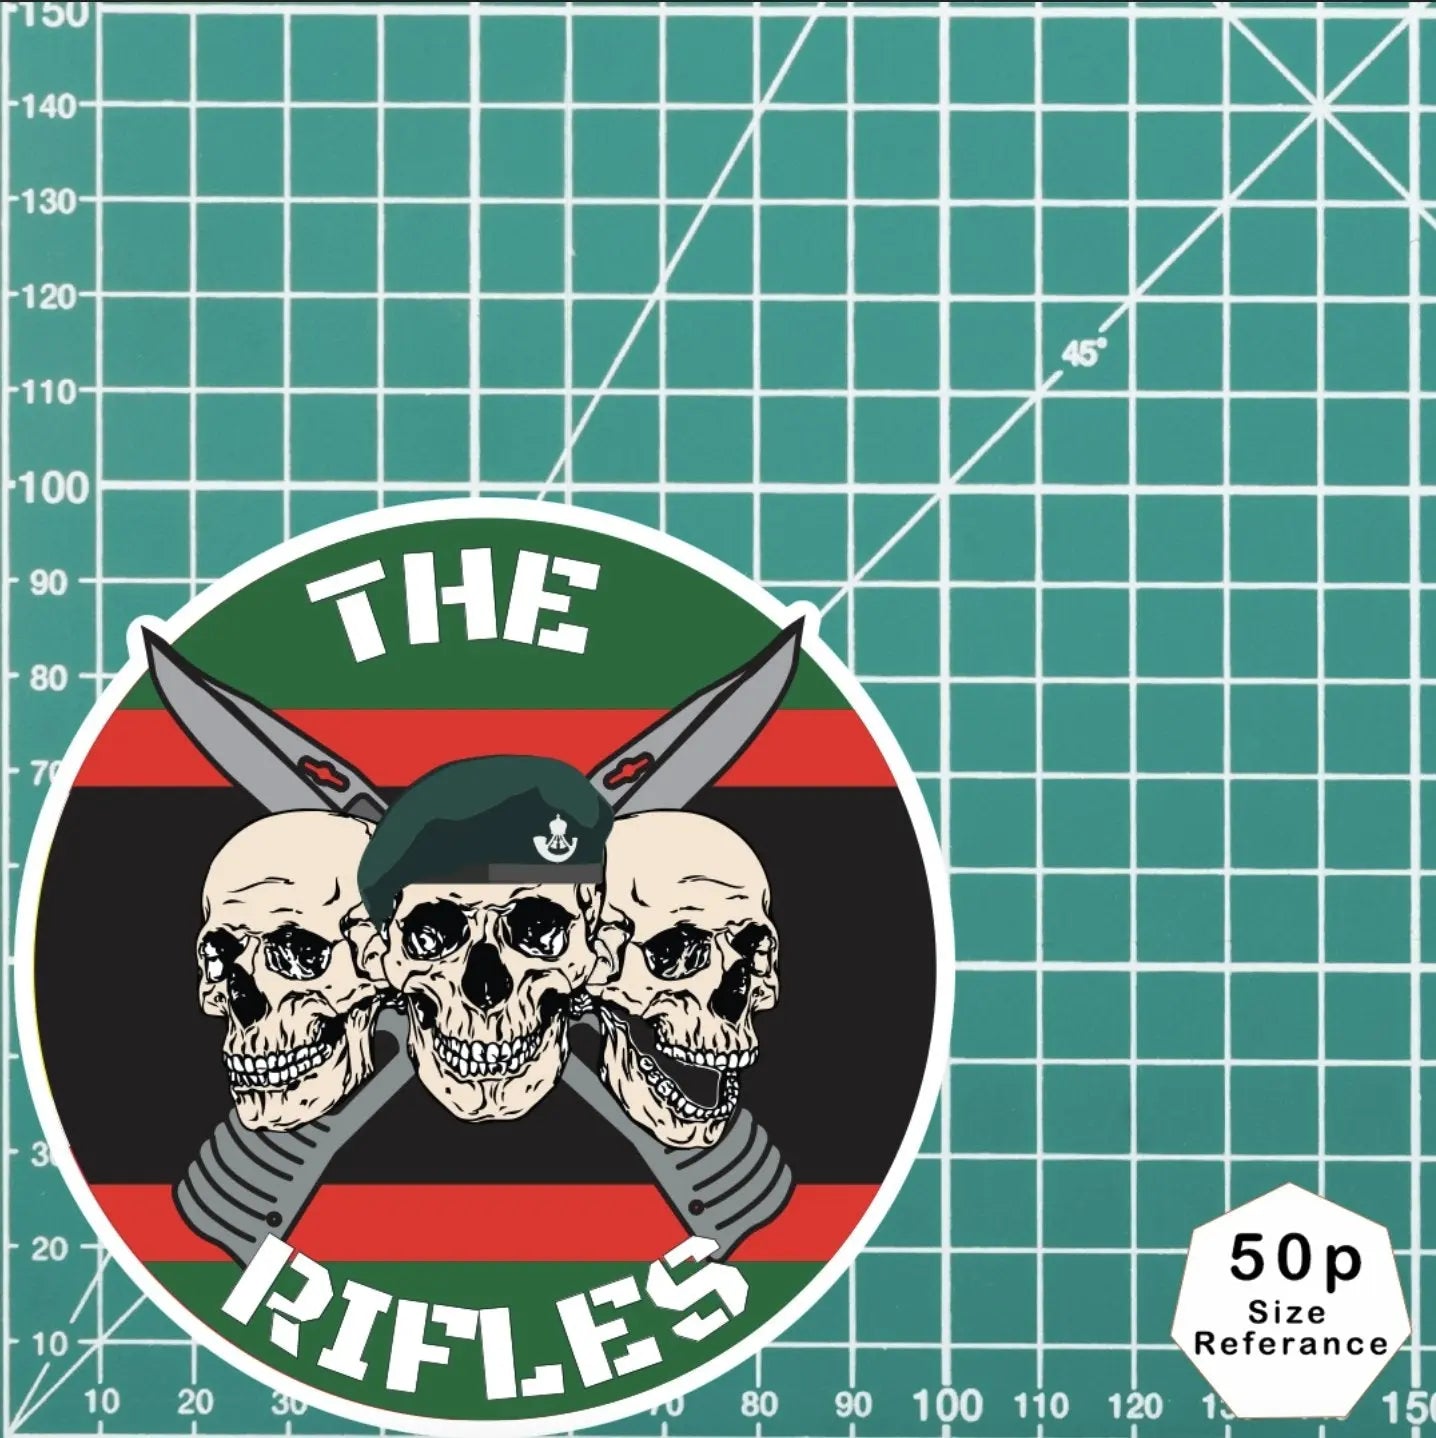 The Rifles Waterproof Vinyl Stickers Three Skull Design redplume